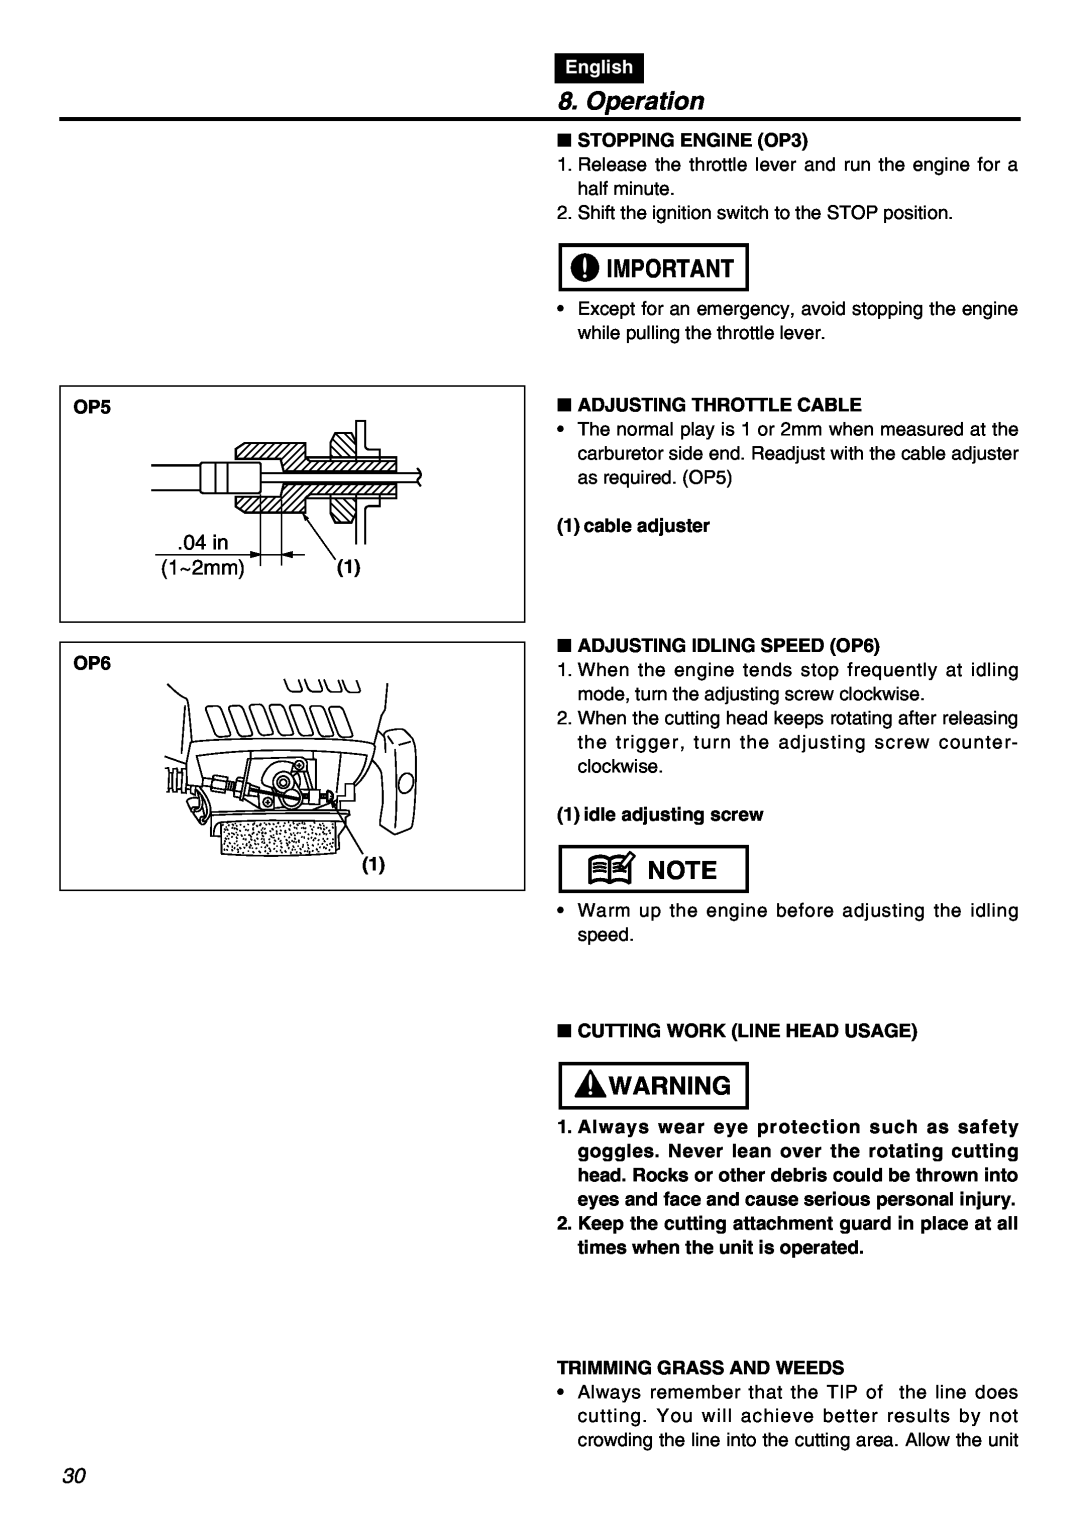 Zenoah BCZ3001S manual 04 in 1~2mm, Operation, English 